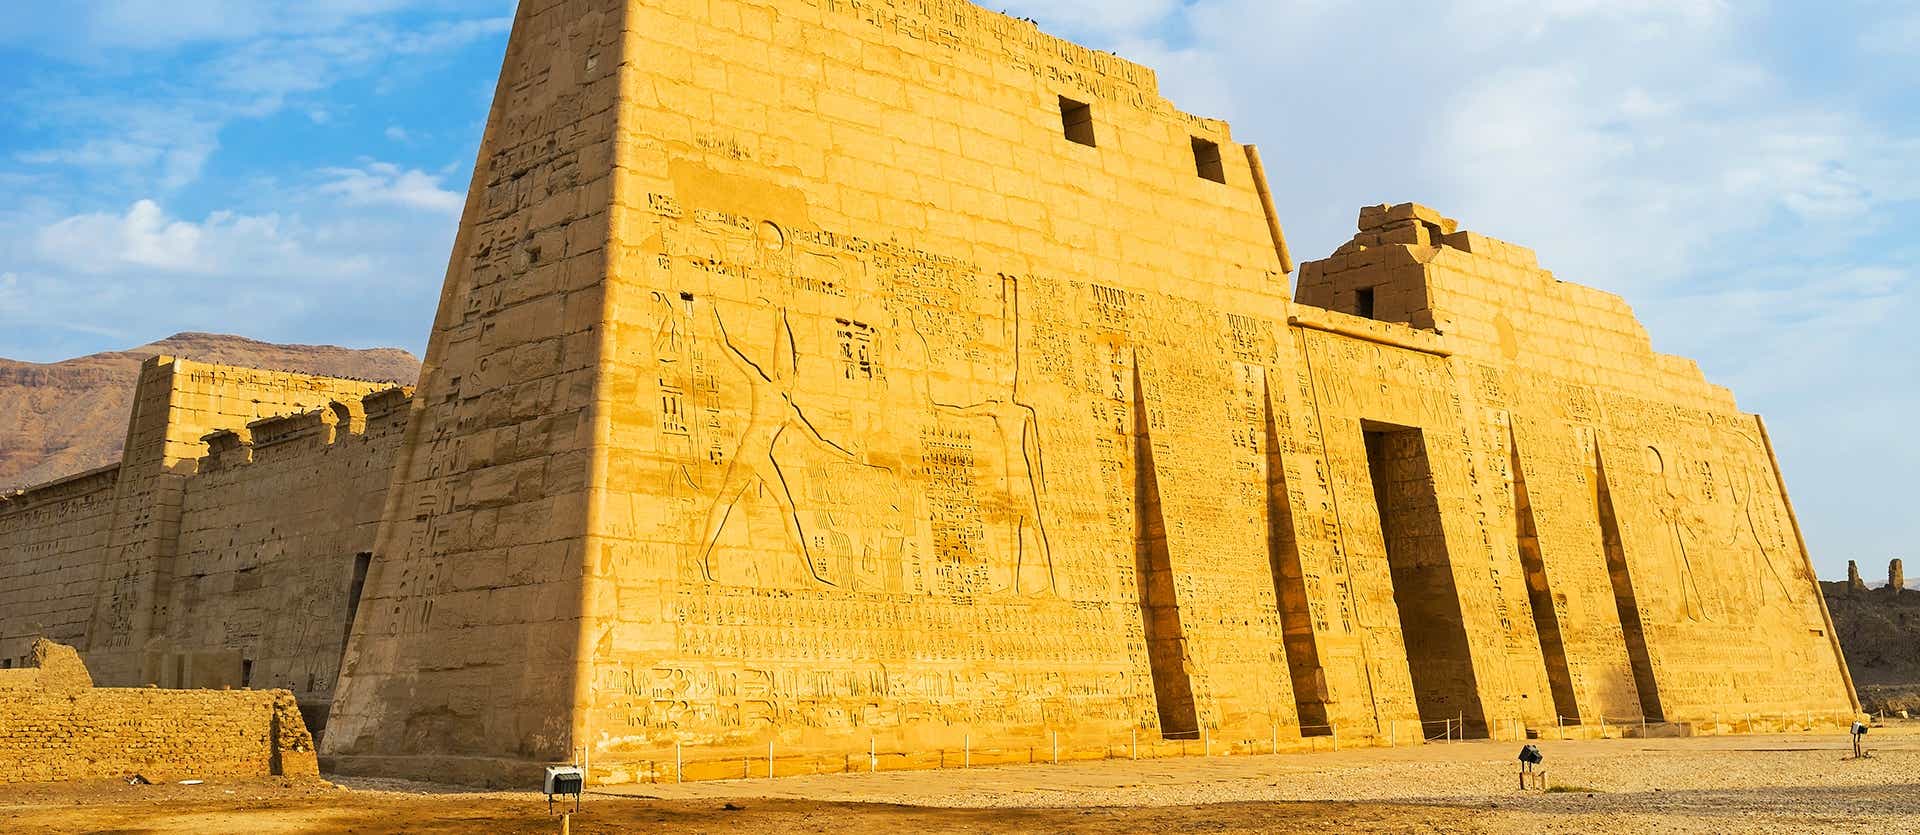 Temple of Ramses III <span class="iconos separador"></span> Luxor <span class="iconos separador"></span> Egypt